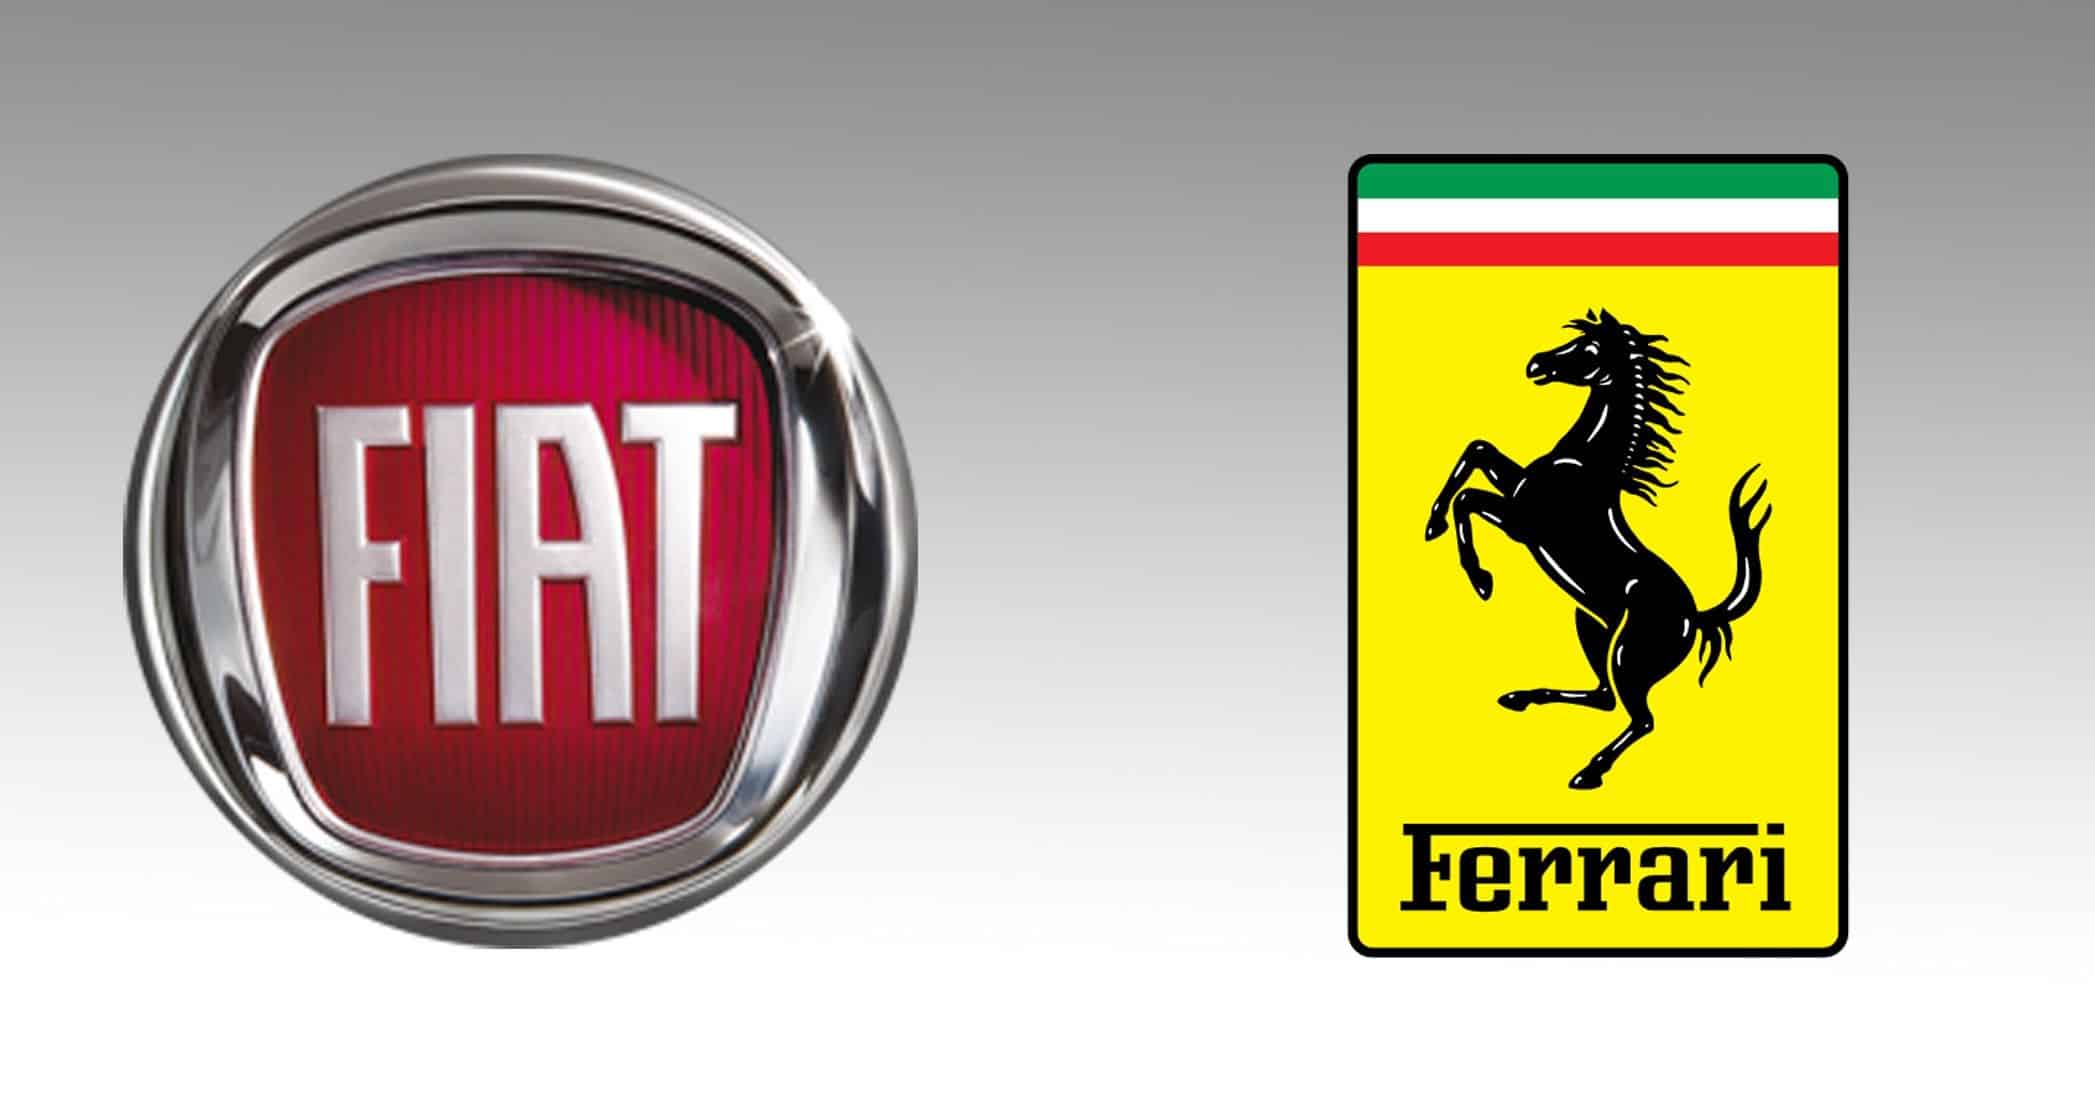 Logotipos de Fiat y Ferrari